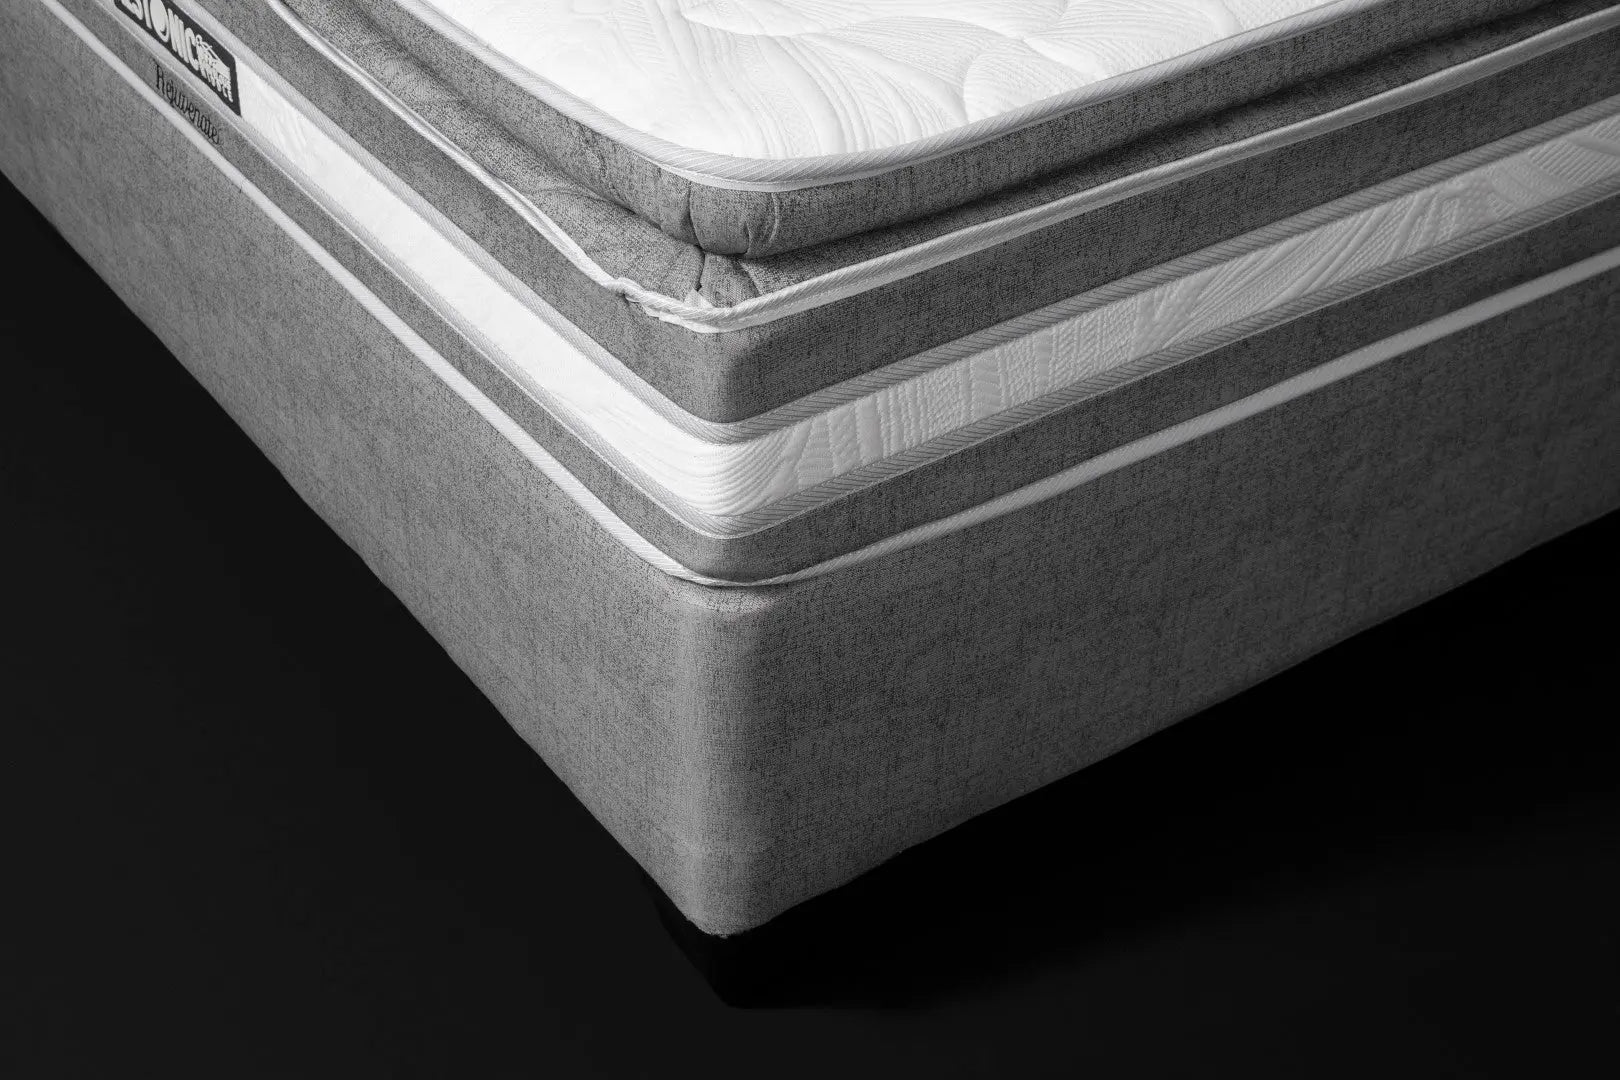 restonic king size mattress reviews